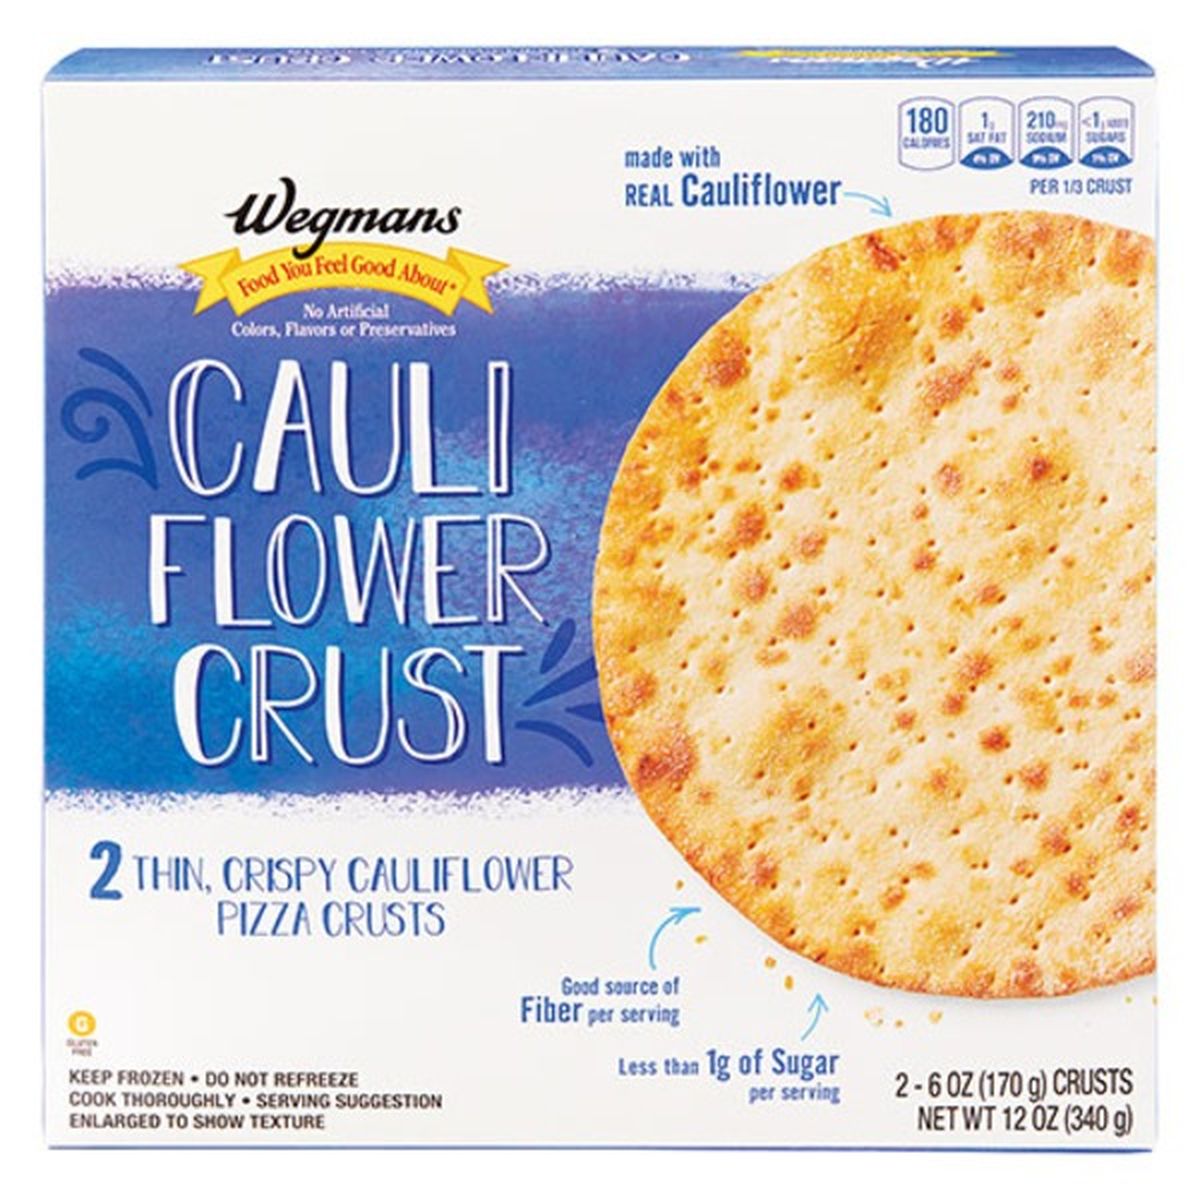 Calories in Wegmans Cauliflower Crust, 2 Pack